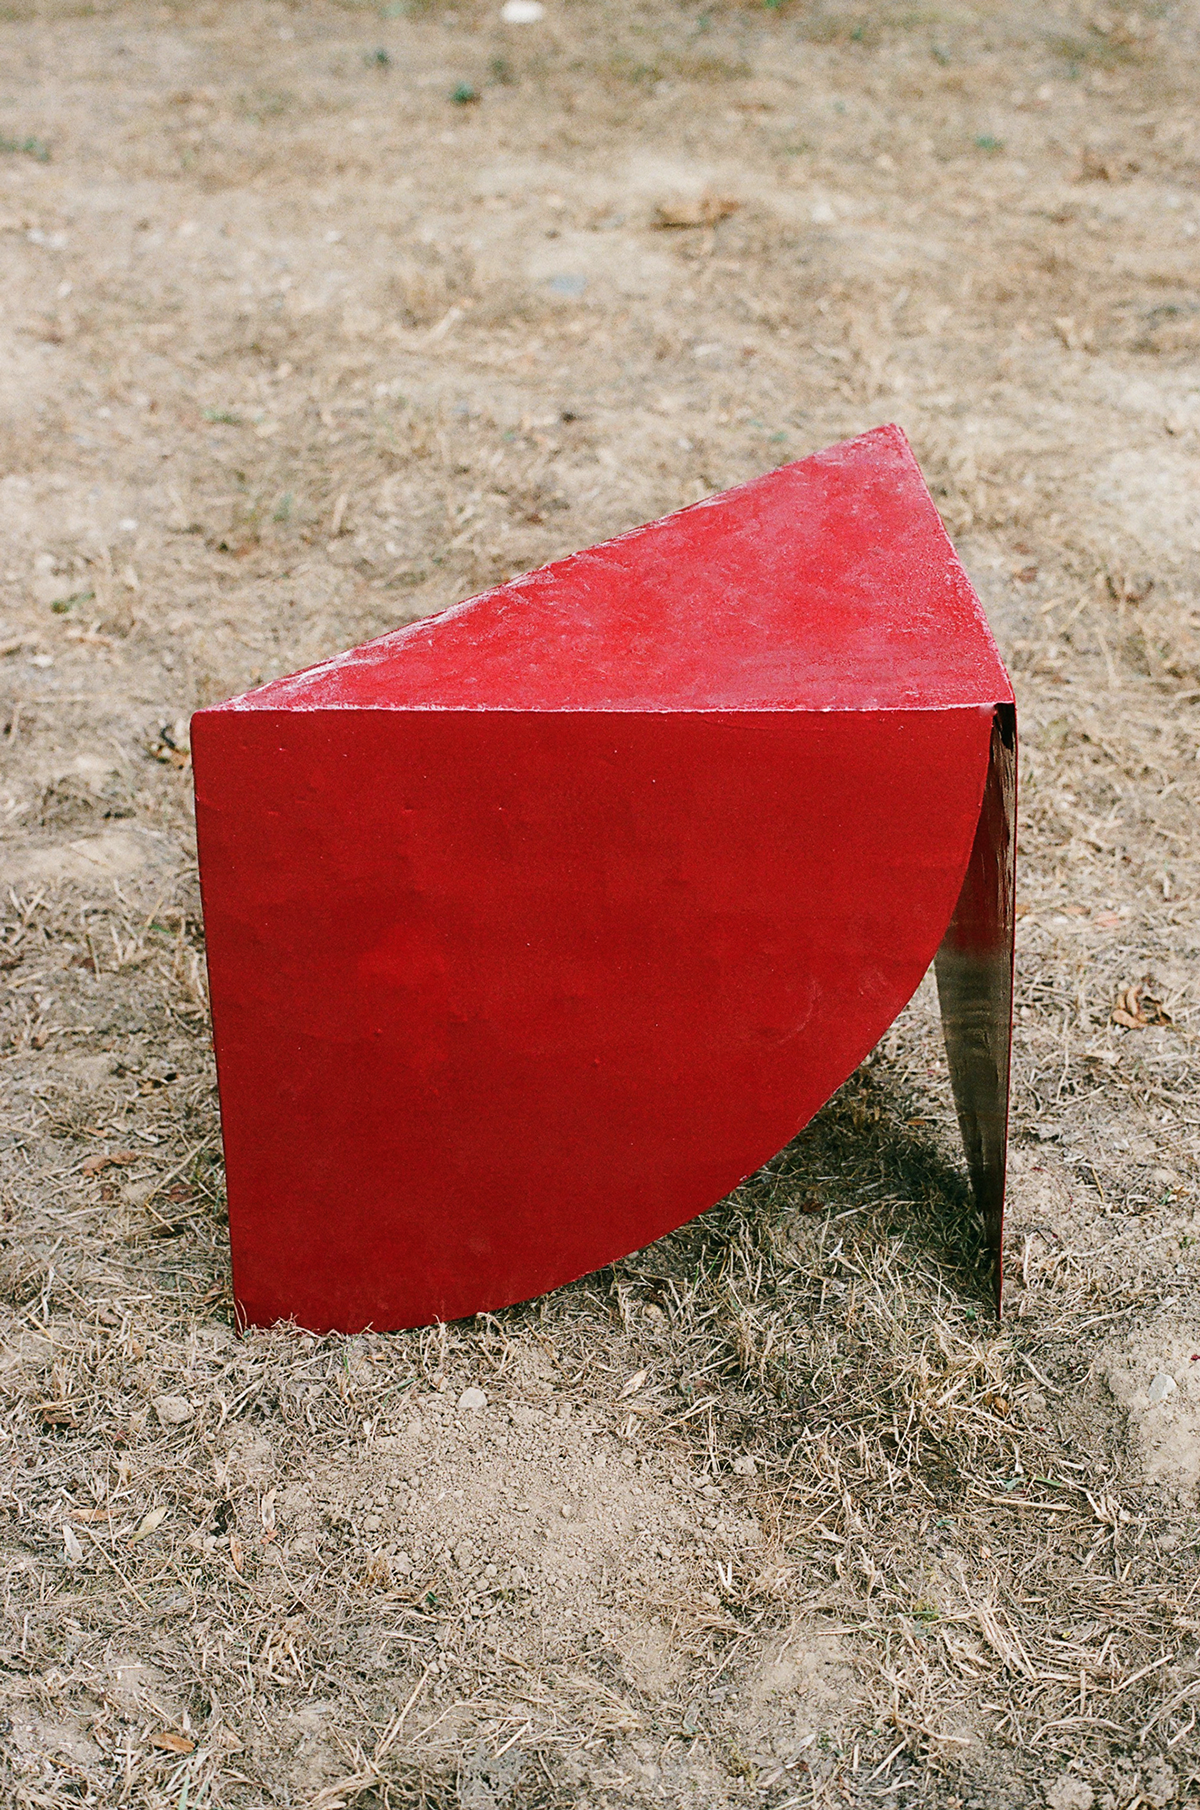 workshop boisbucher 2016 furniture that transforms space muller van severen metal geometry corner series stool seat table france